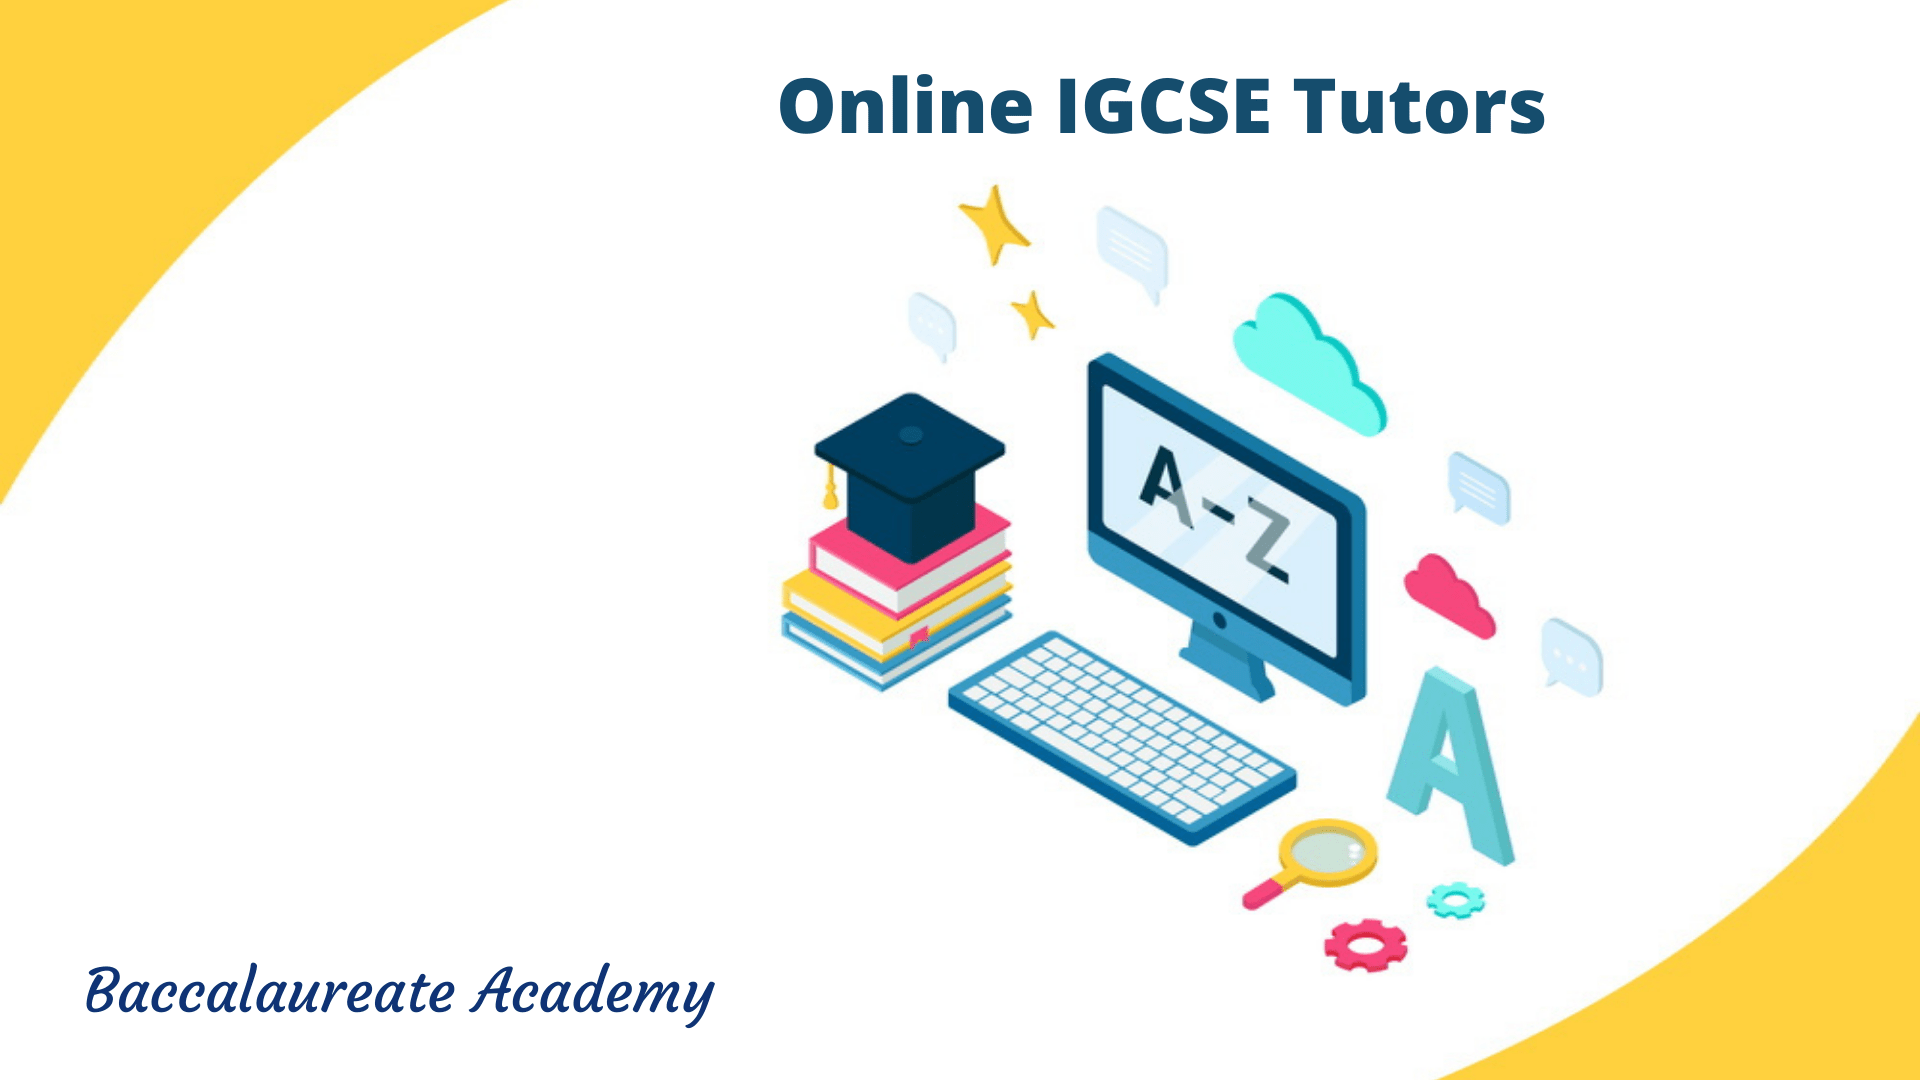 Online IGCSE Tutors | Online IGCSE Tutor - Baccalaureate Academy